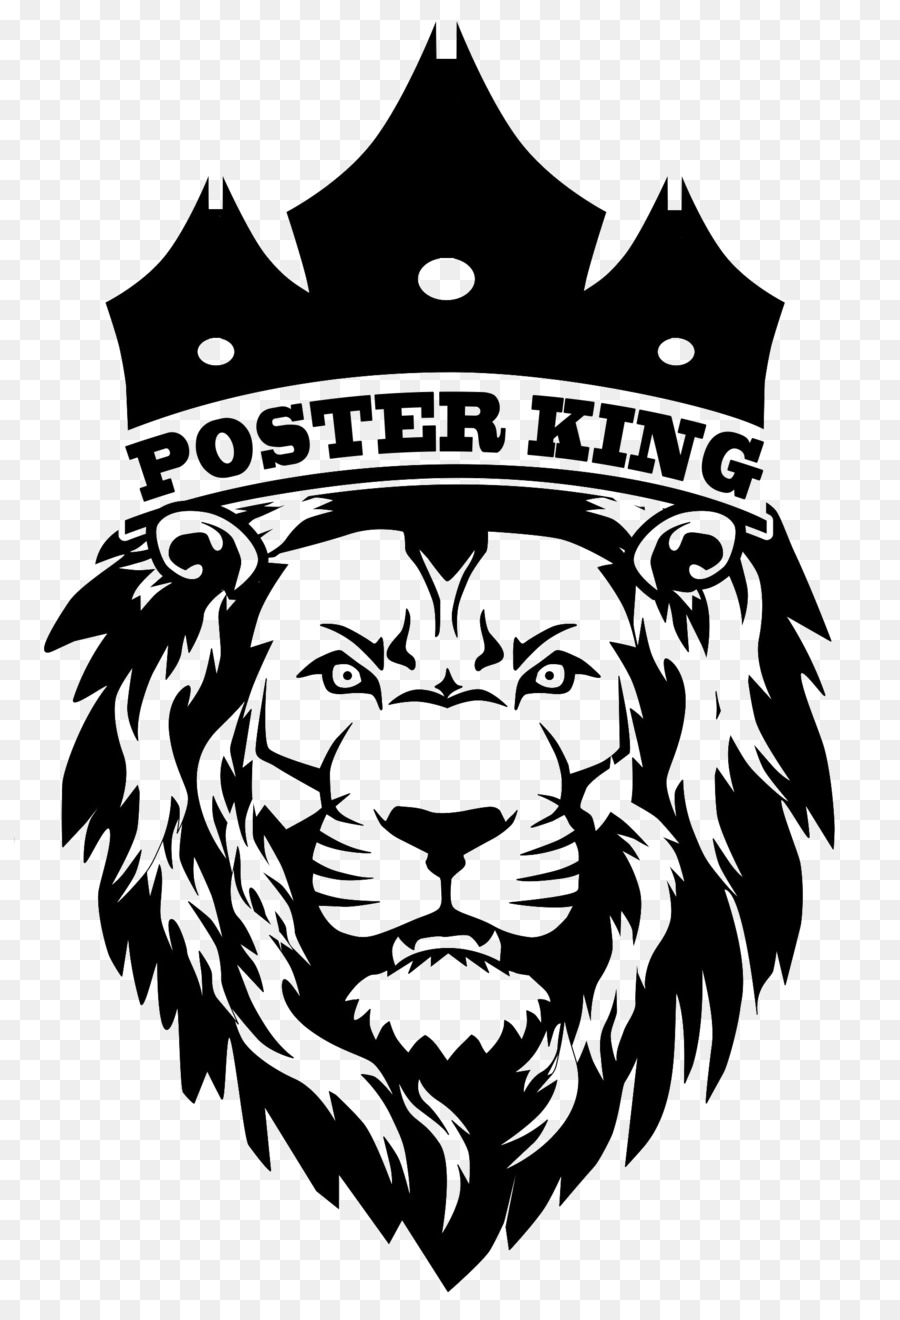 Black lion icon design Royalty Free Vector Image